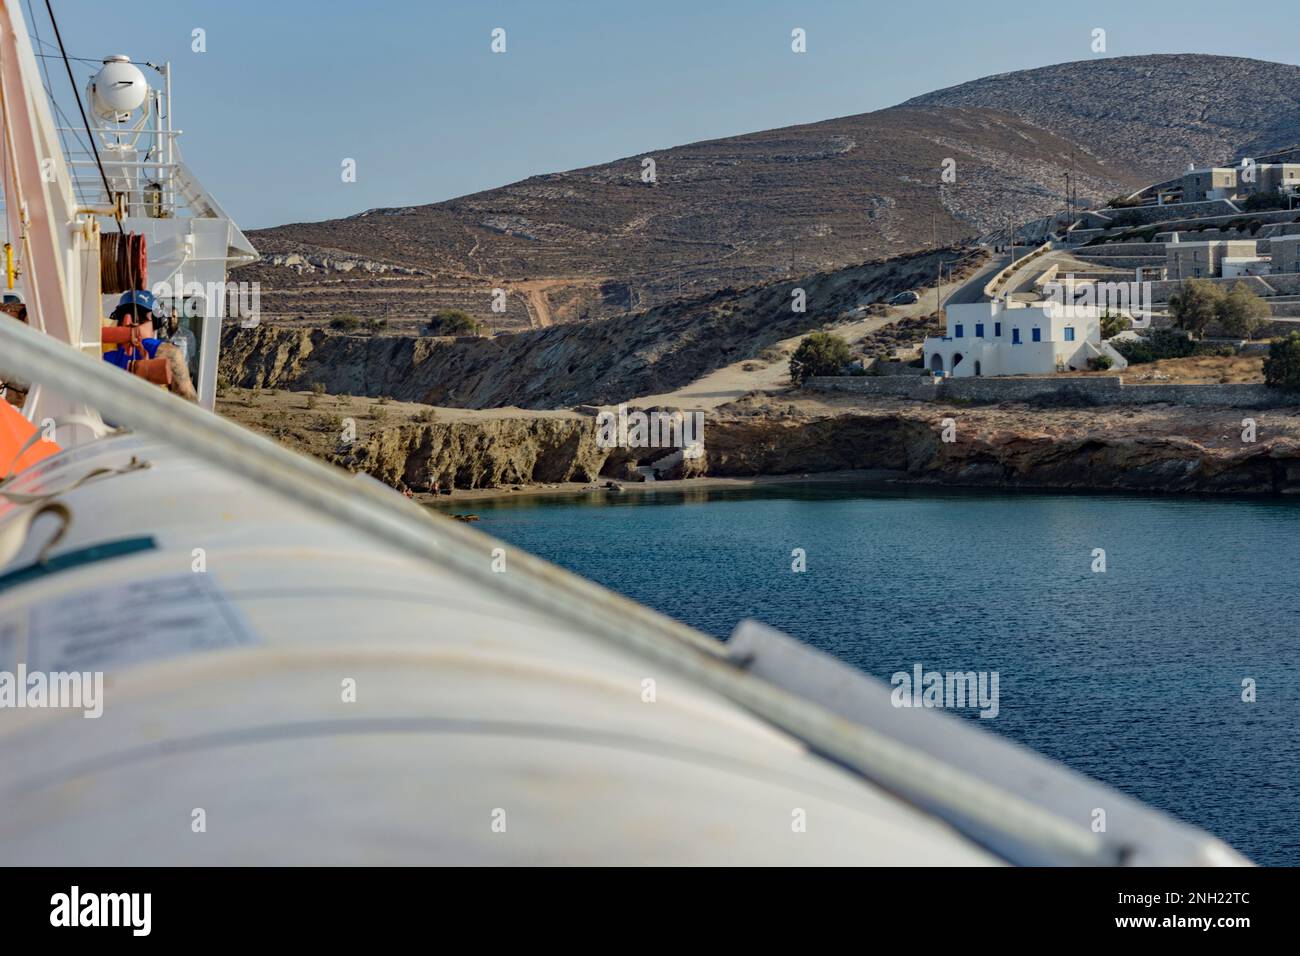 Folegandros island coasts seen from the ferry Stock Photo